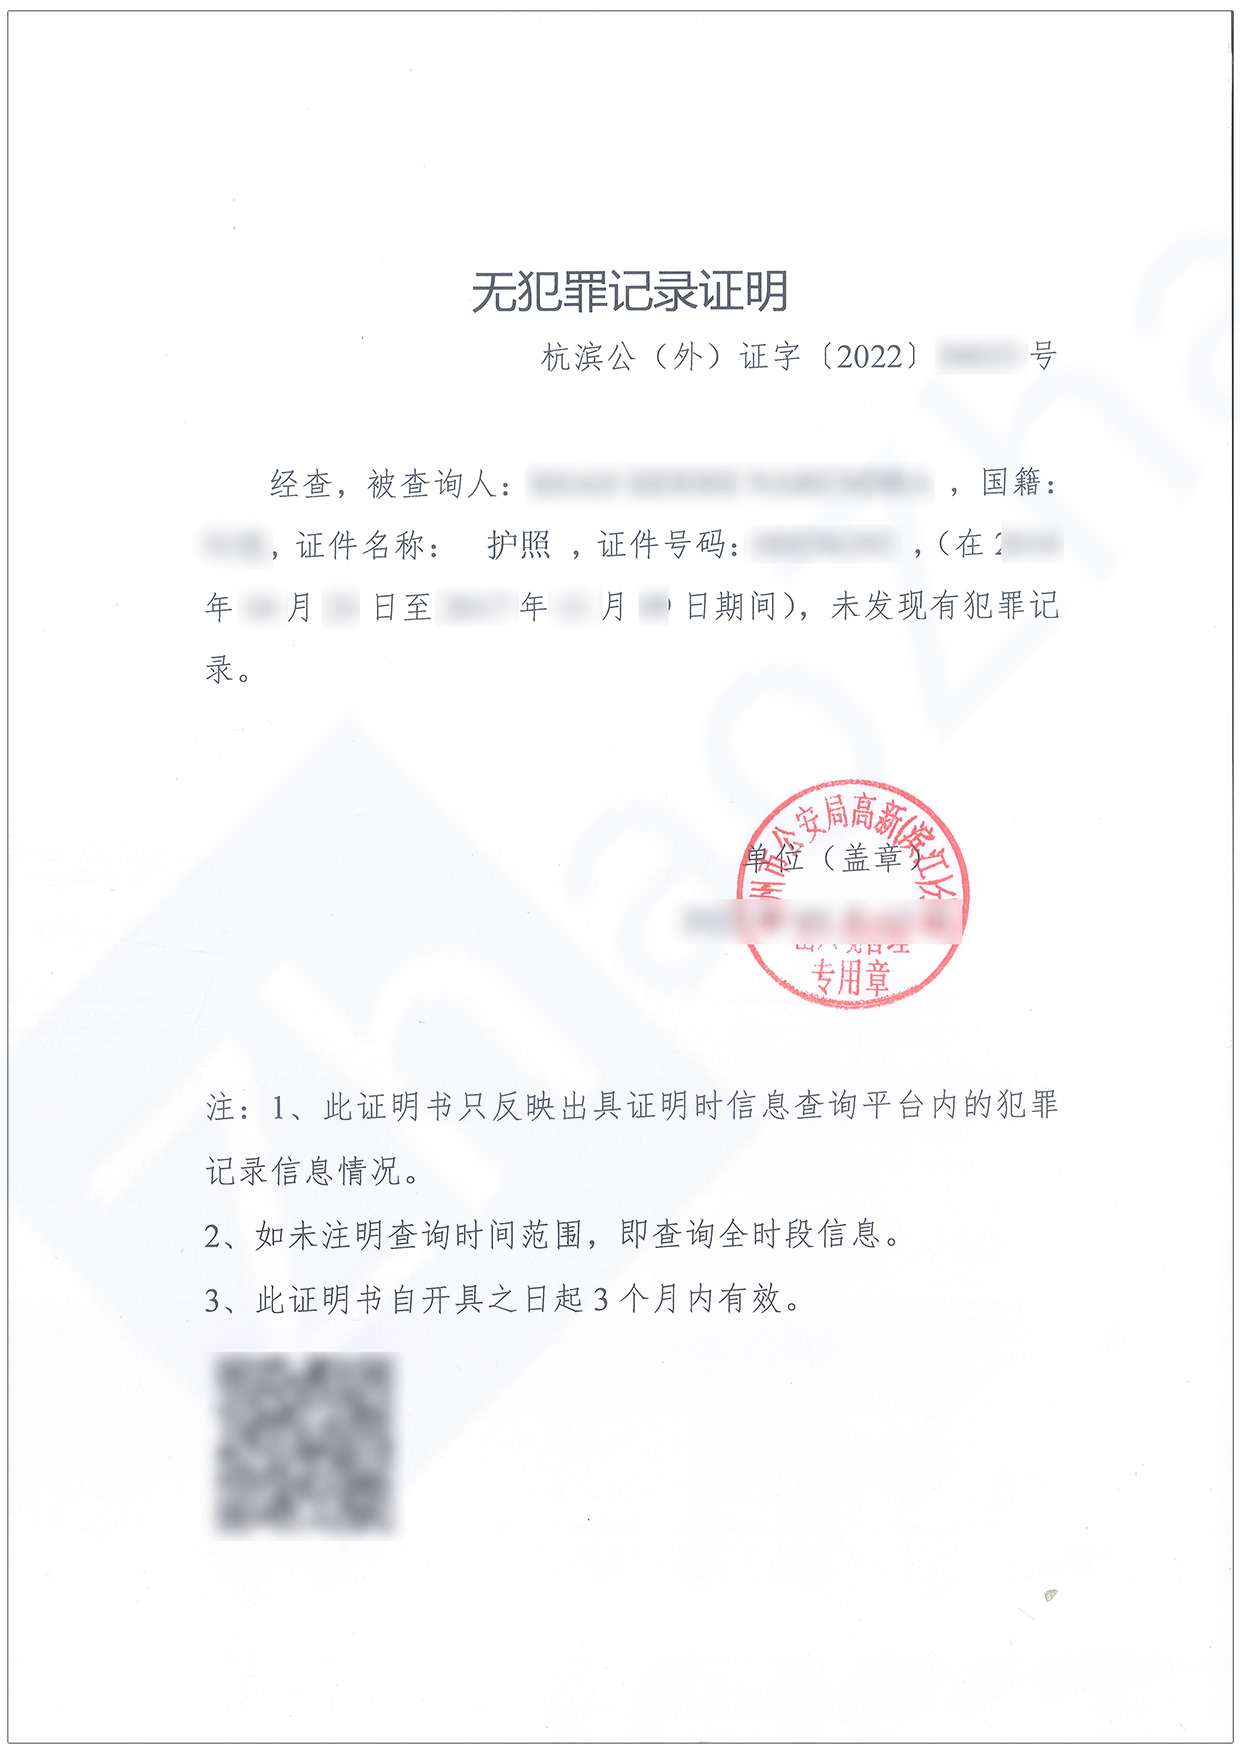 Sample Hangzhou Certificate of No Criminal Record